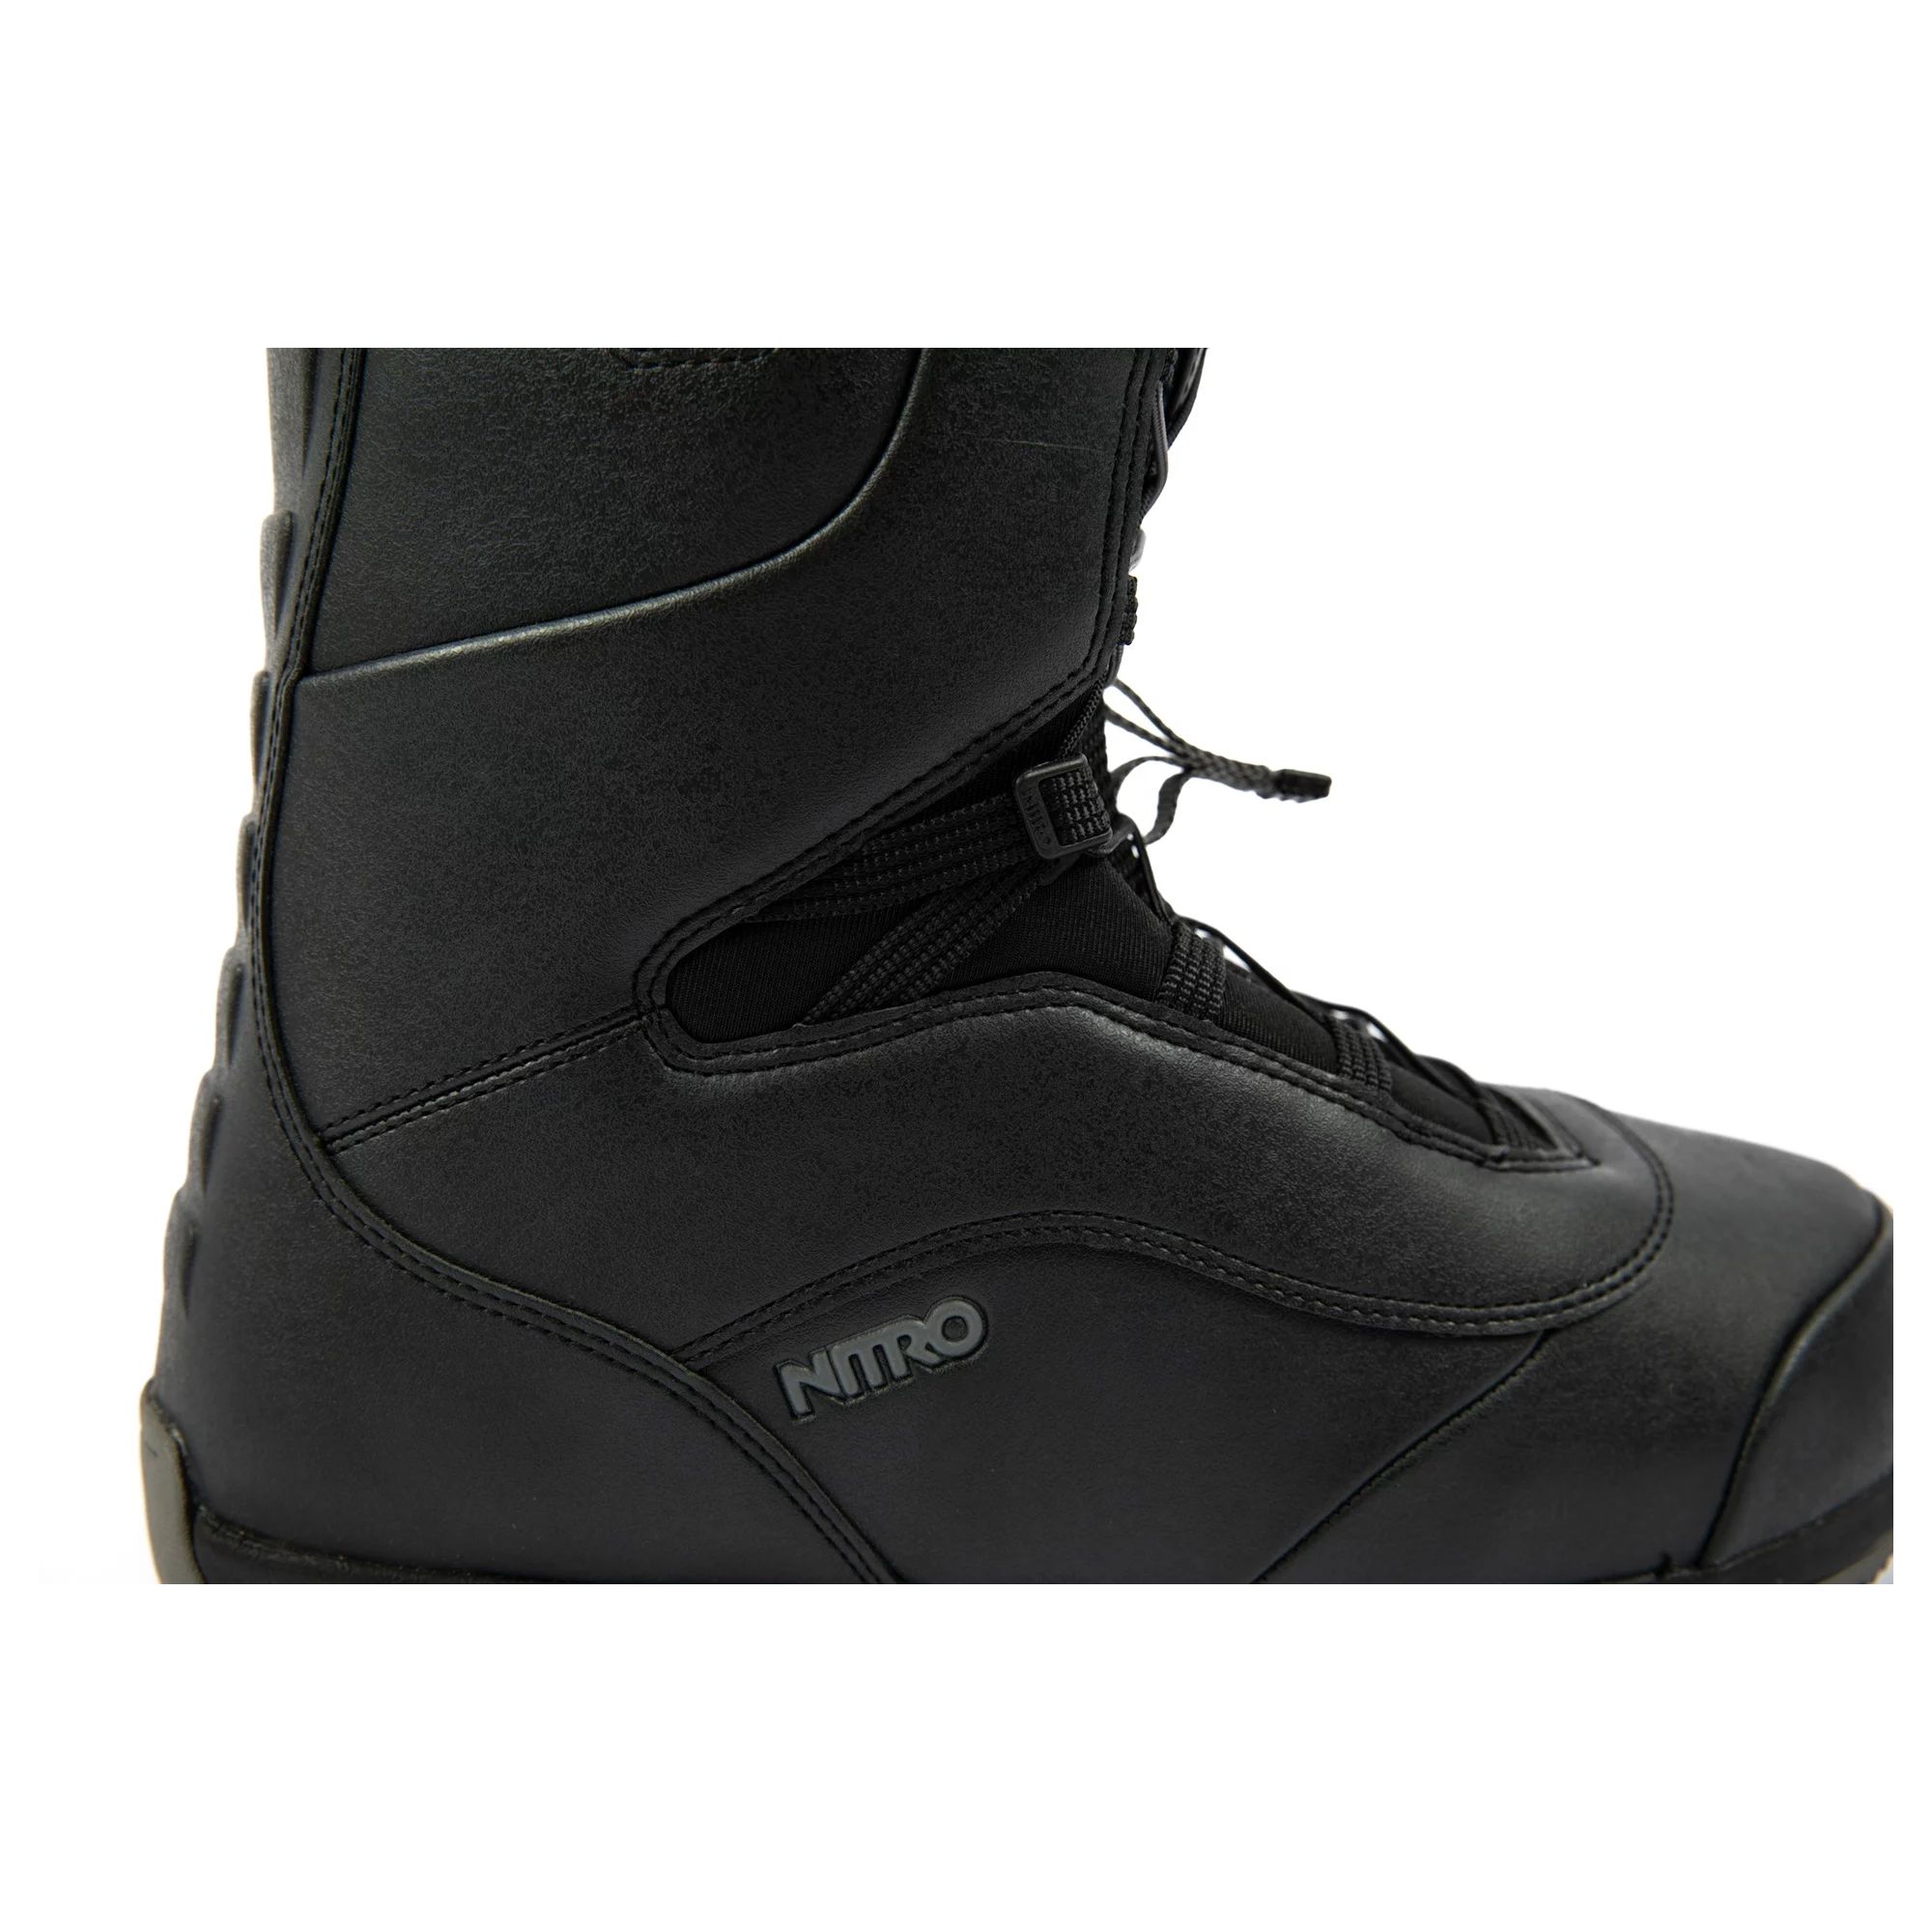 Snowboard Boots -  nitro VENTURE TLS